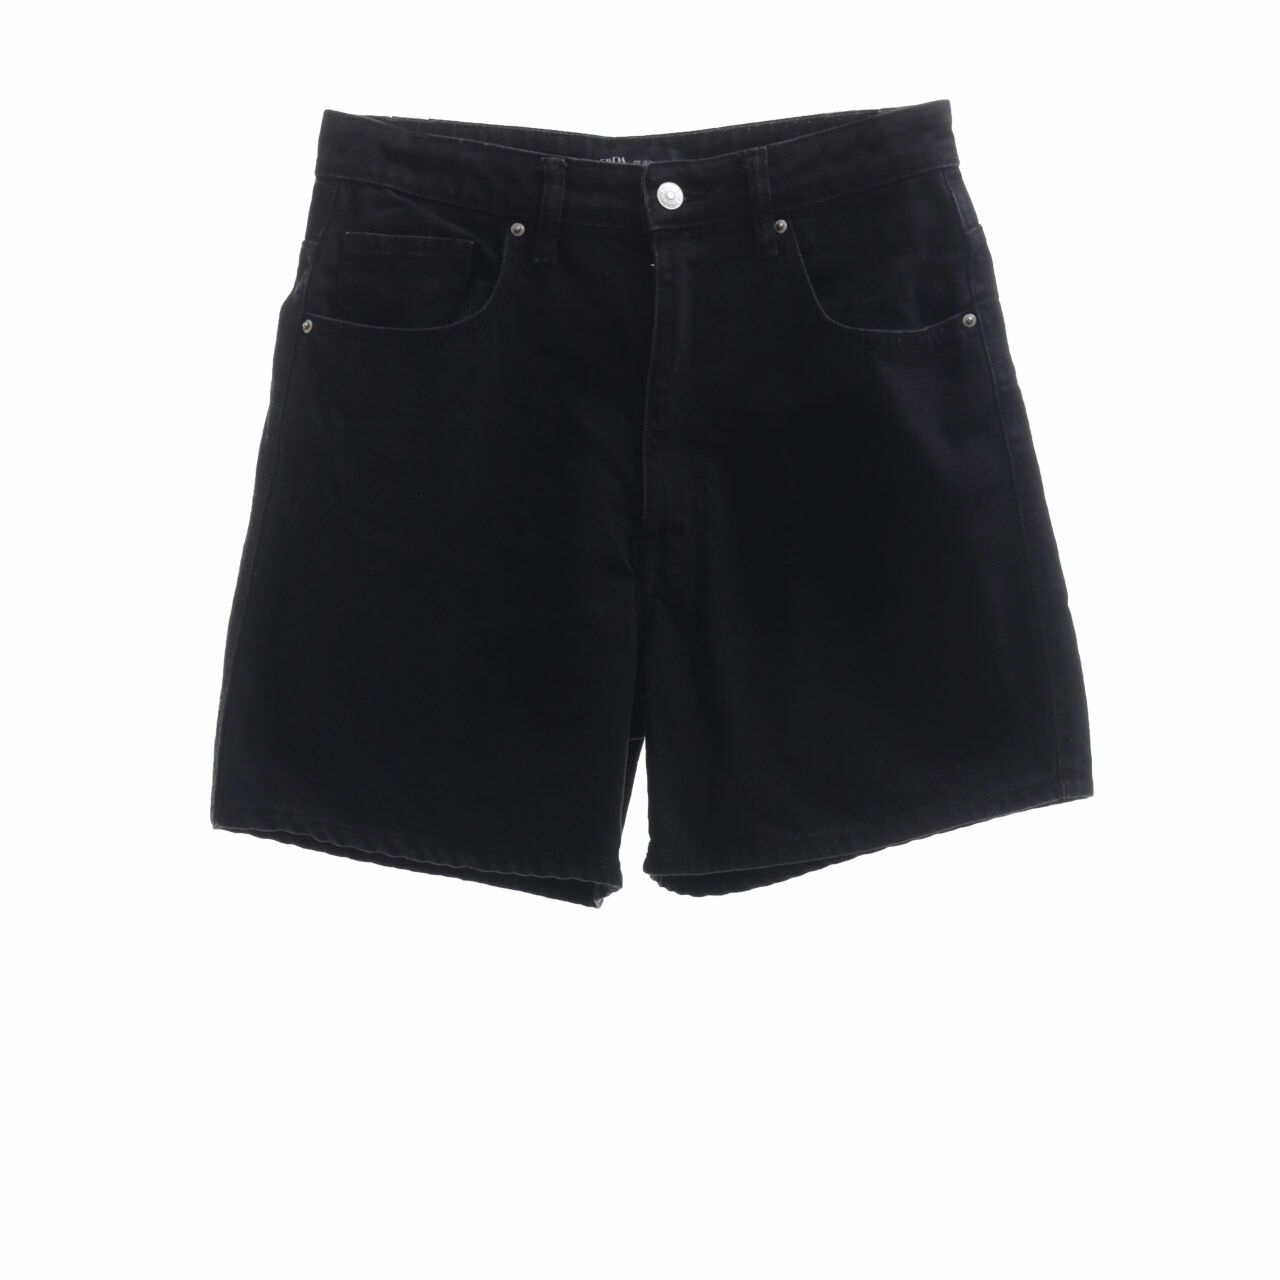 Zara Black Shorts Pants